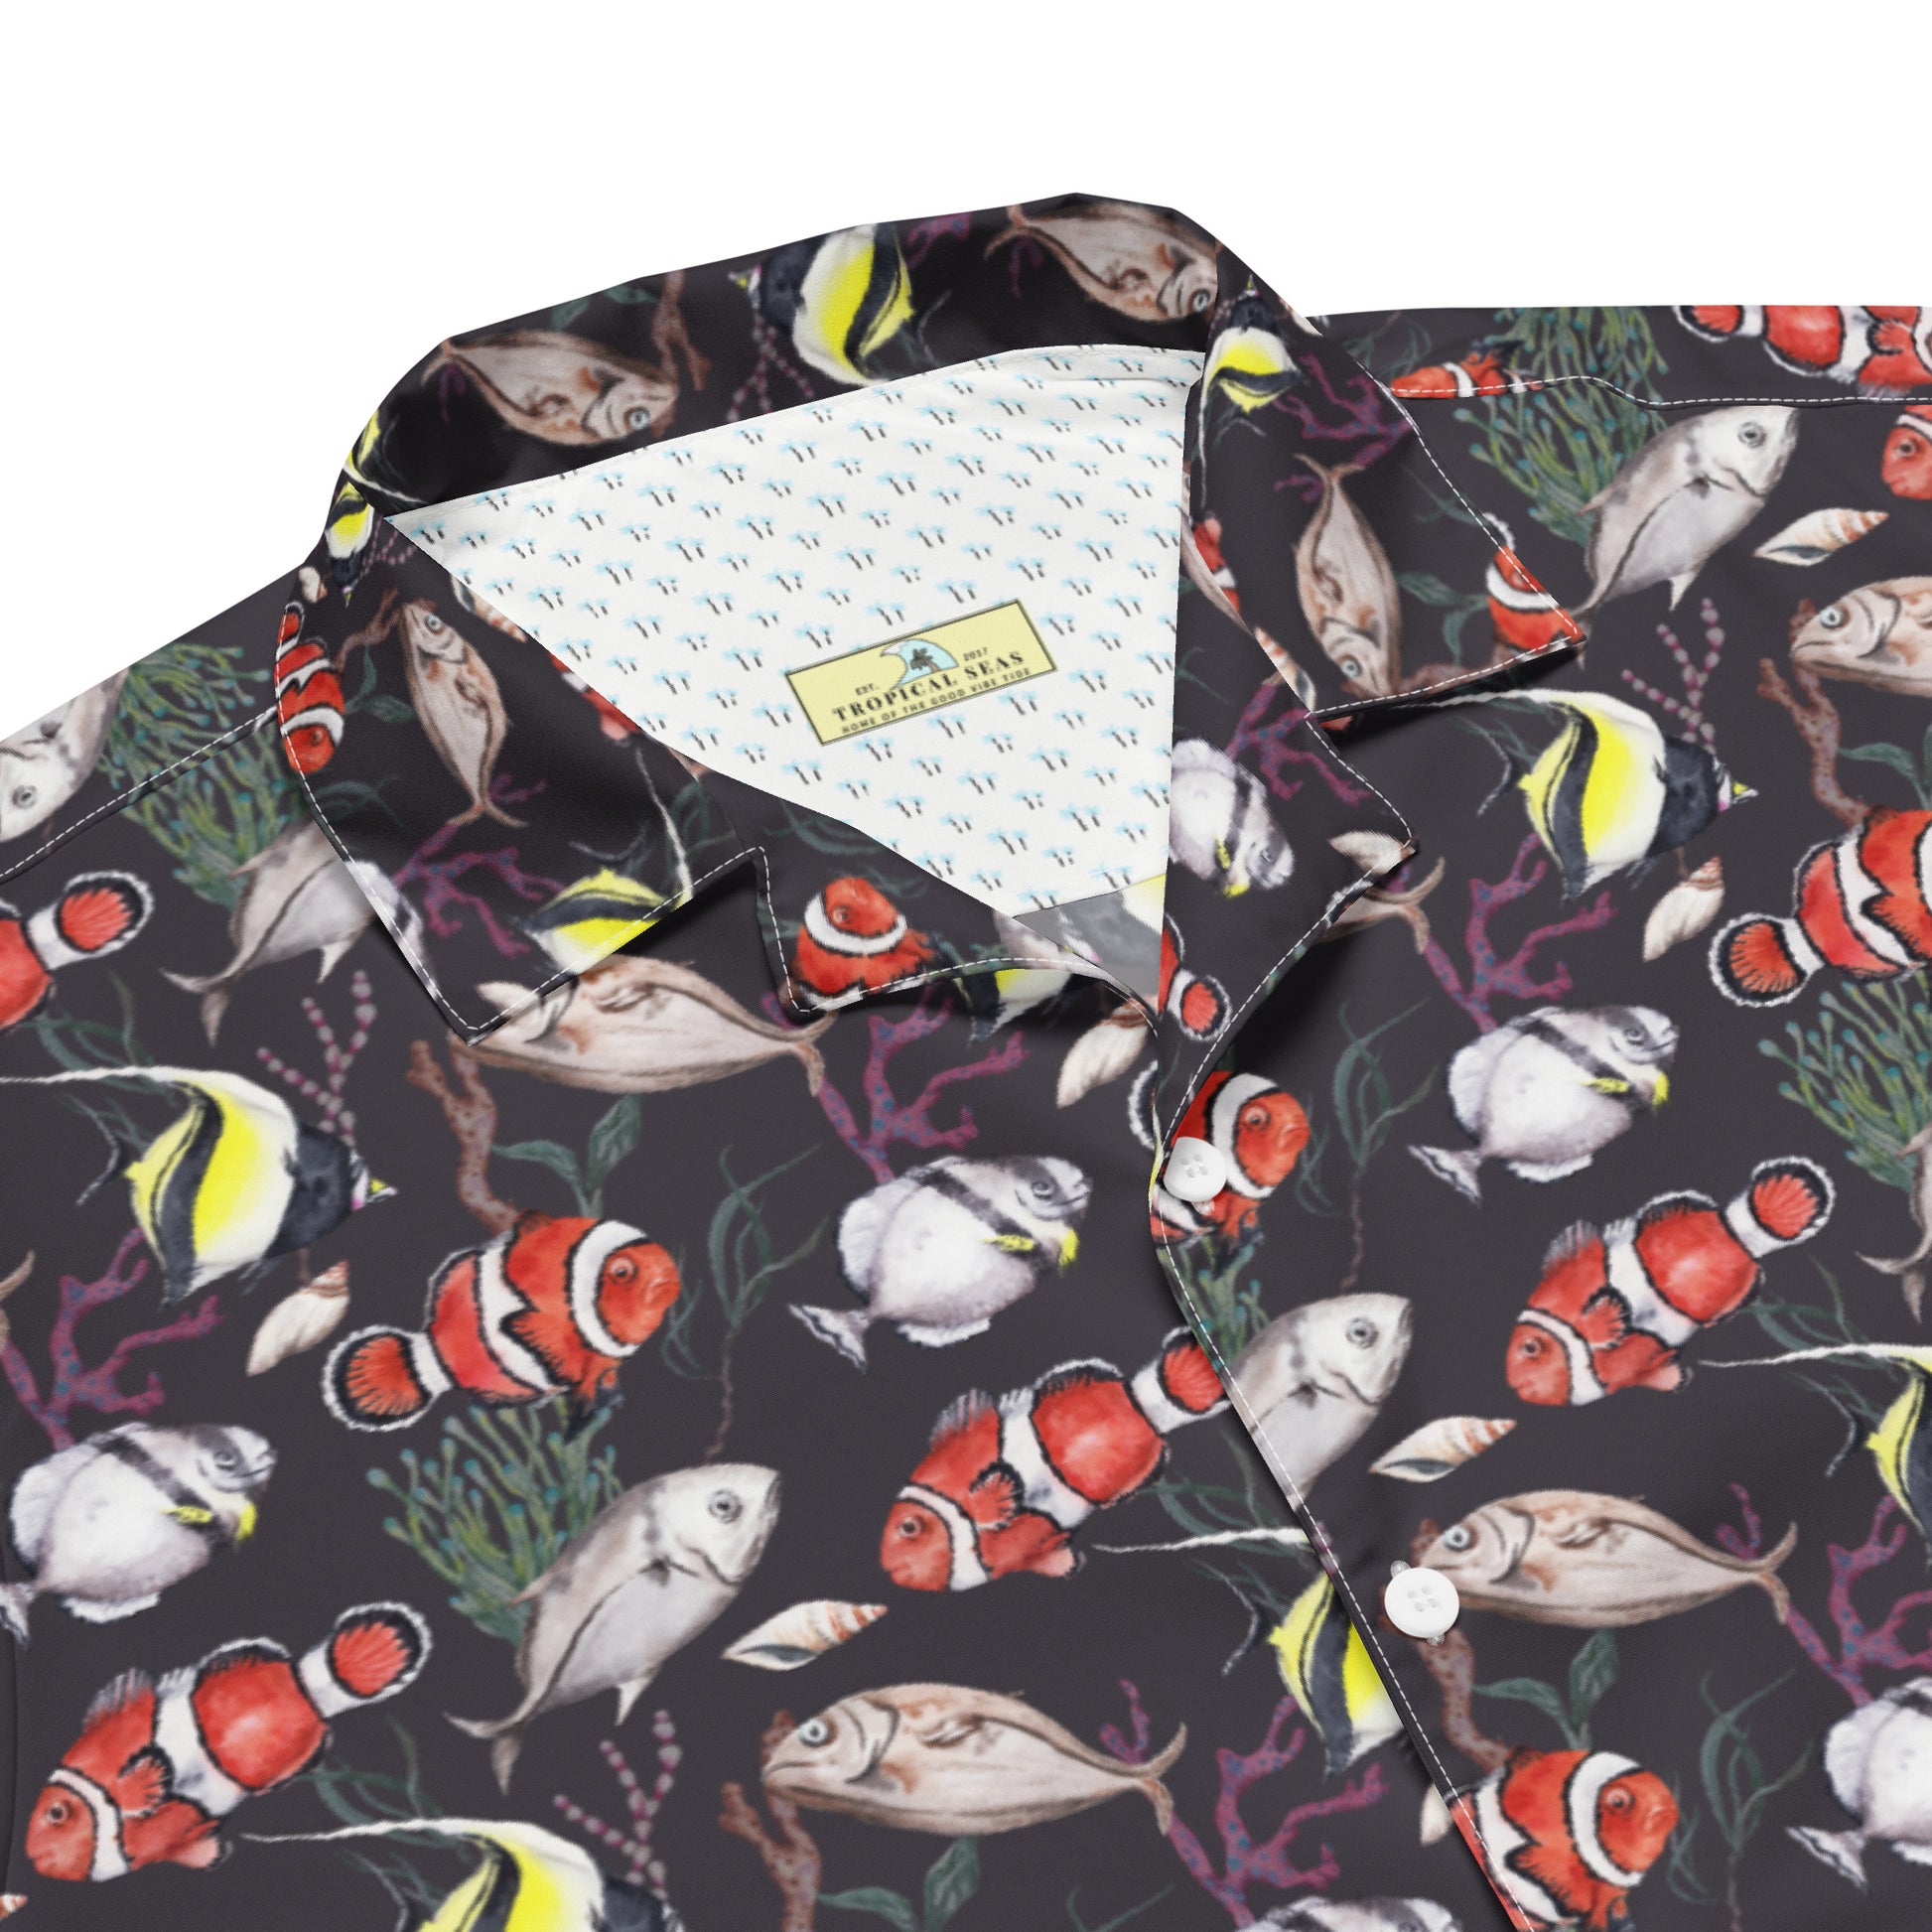 Murky Reef button shirt - Tropical Seas Clothing 